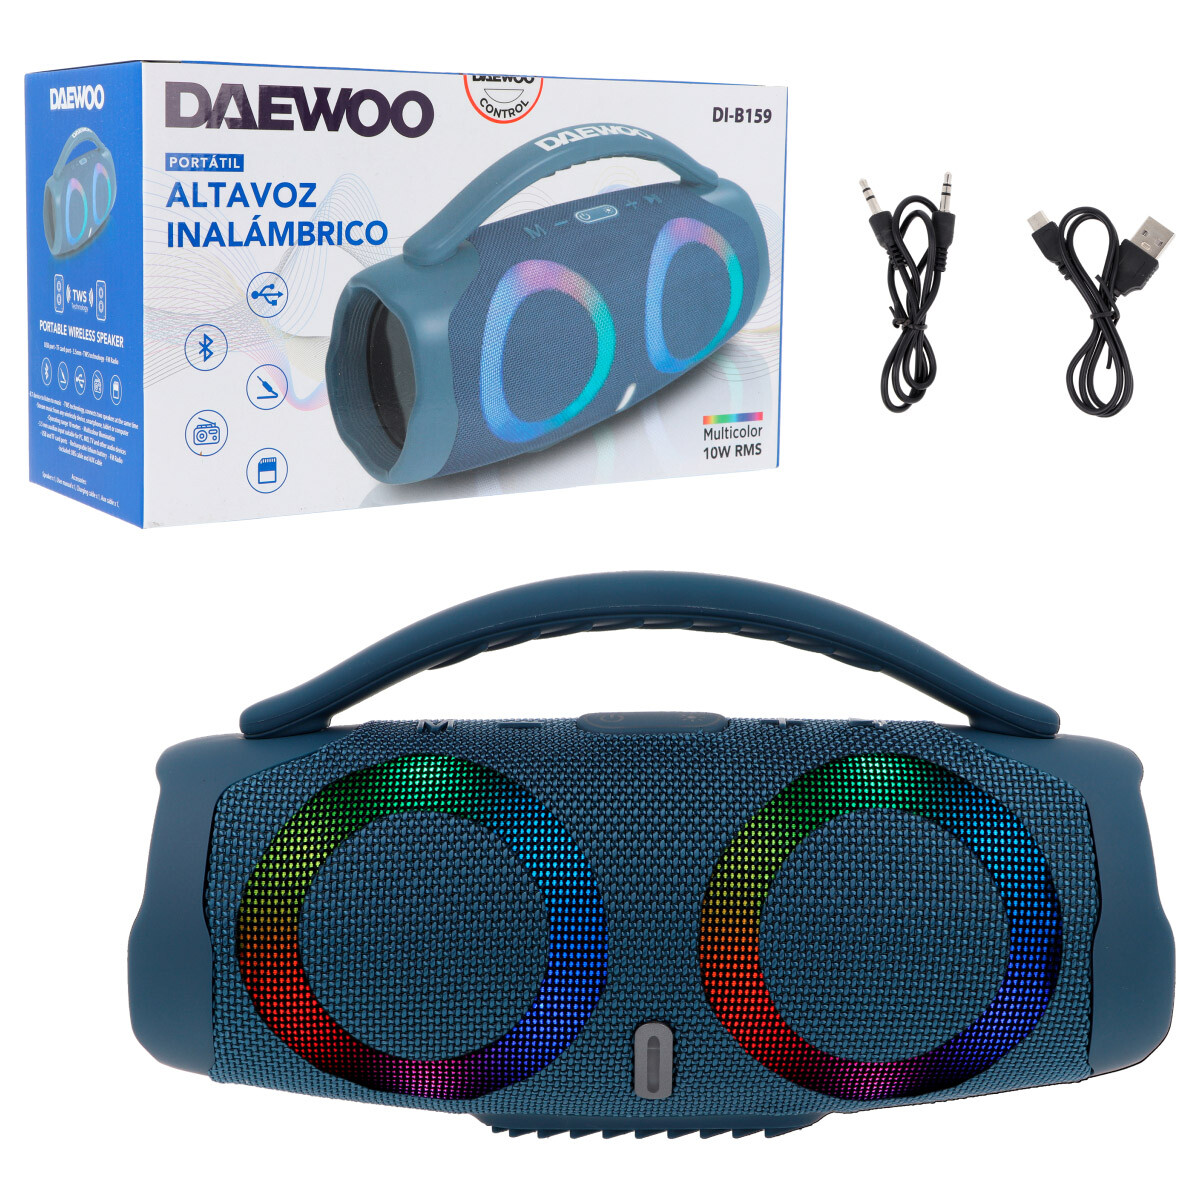 Parlante Daewoo portatil con bluetooth y luces 